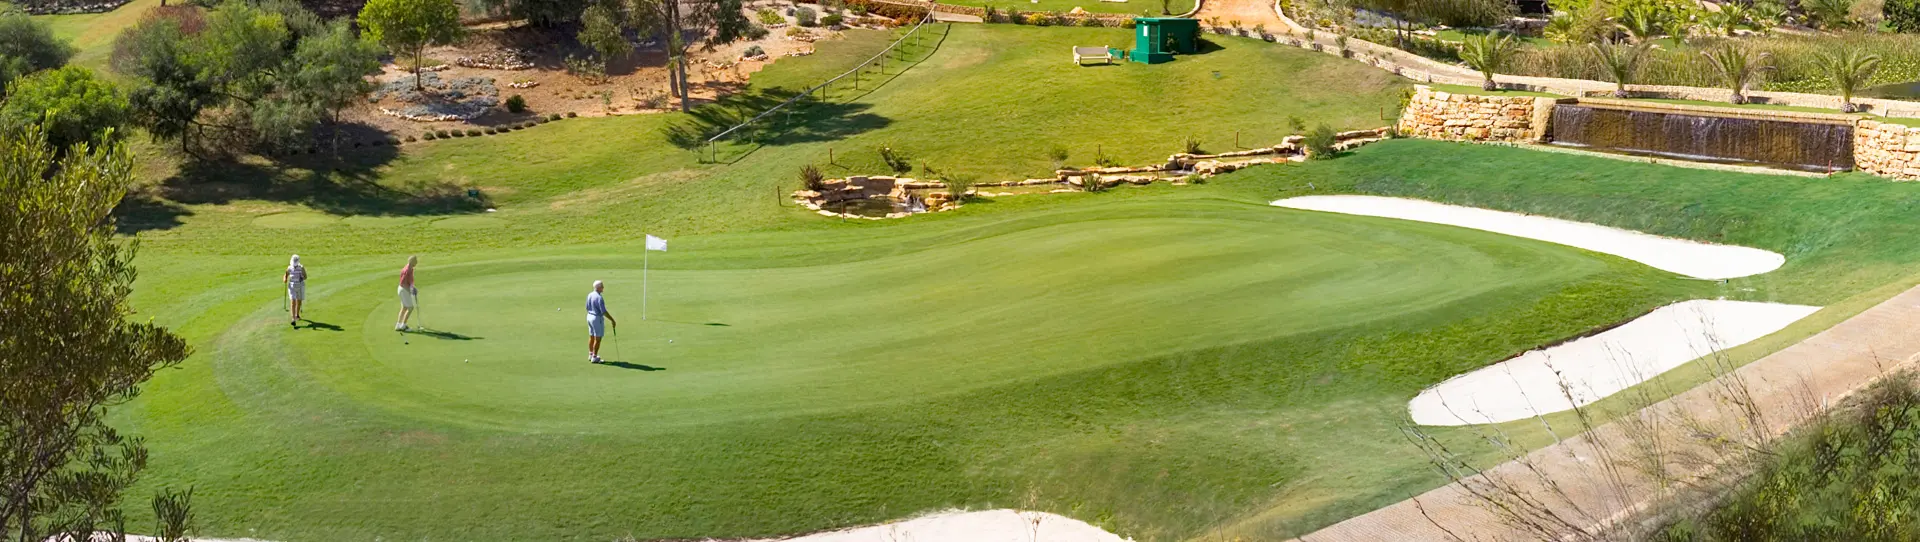 Portugal Golf Driving Range - Santo Antonio Golf Academy - Photo 1